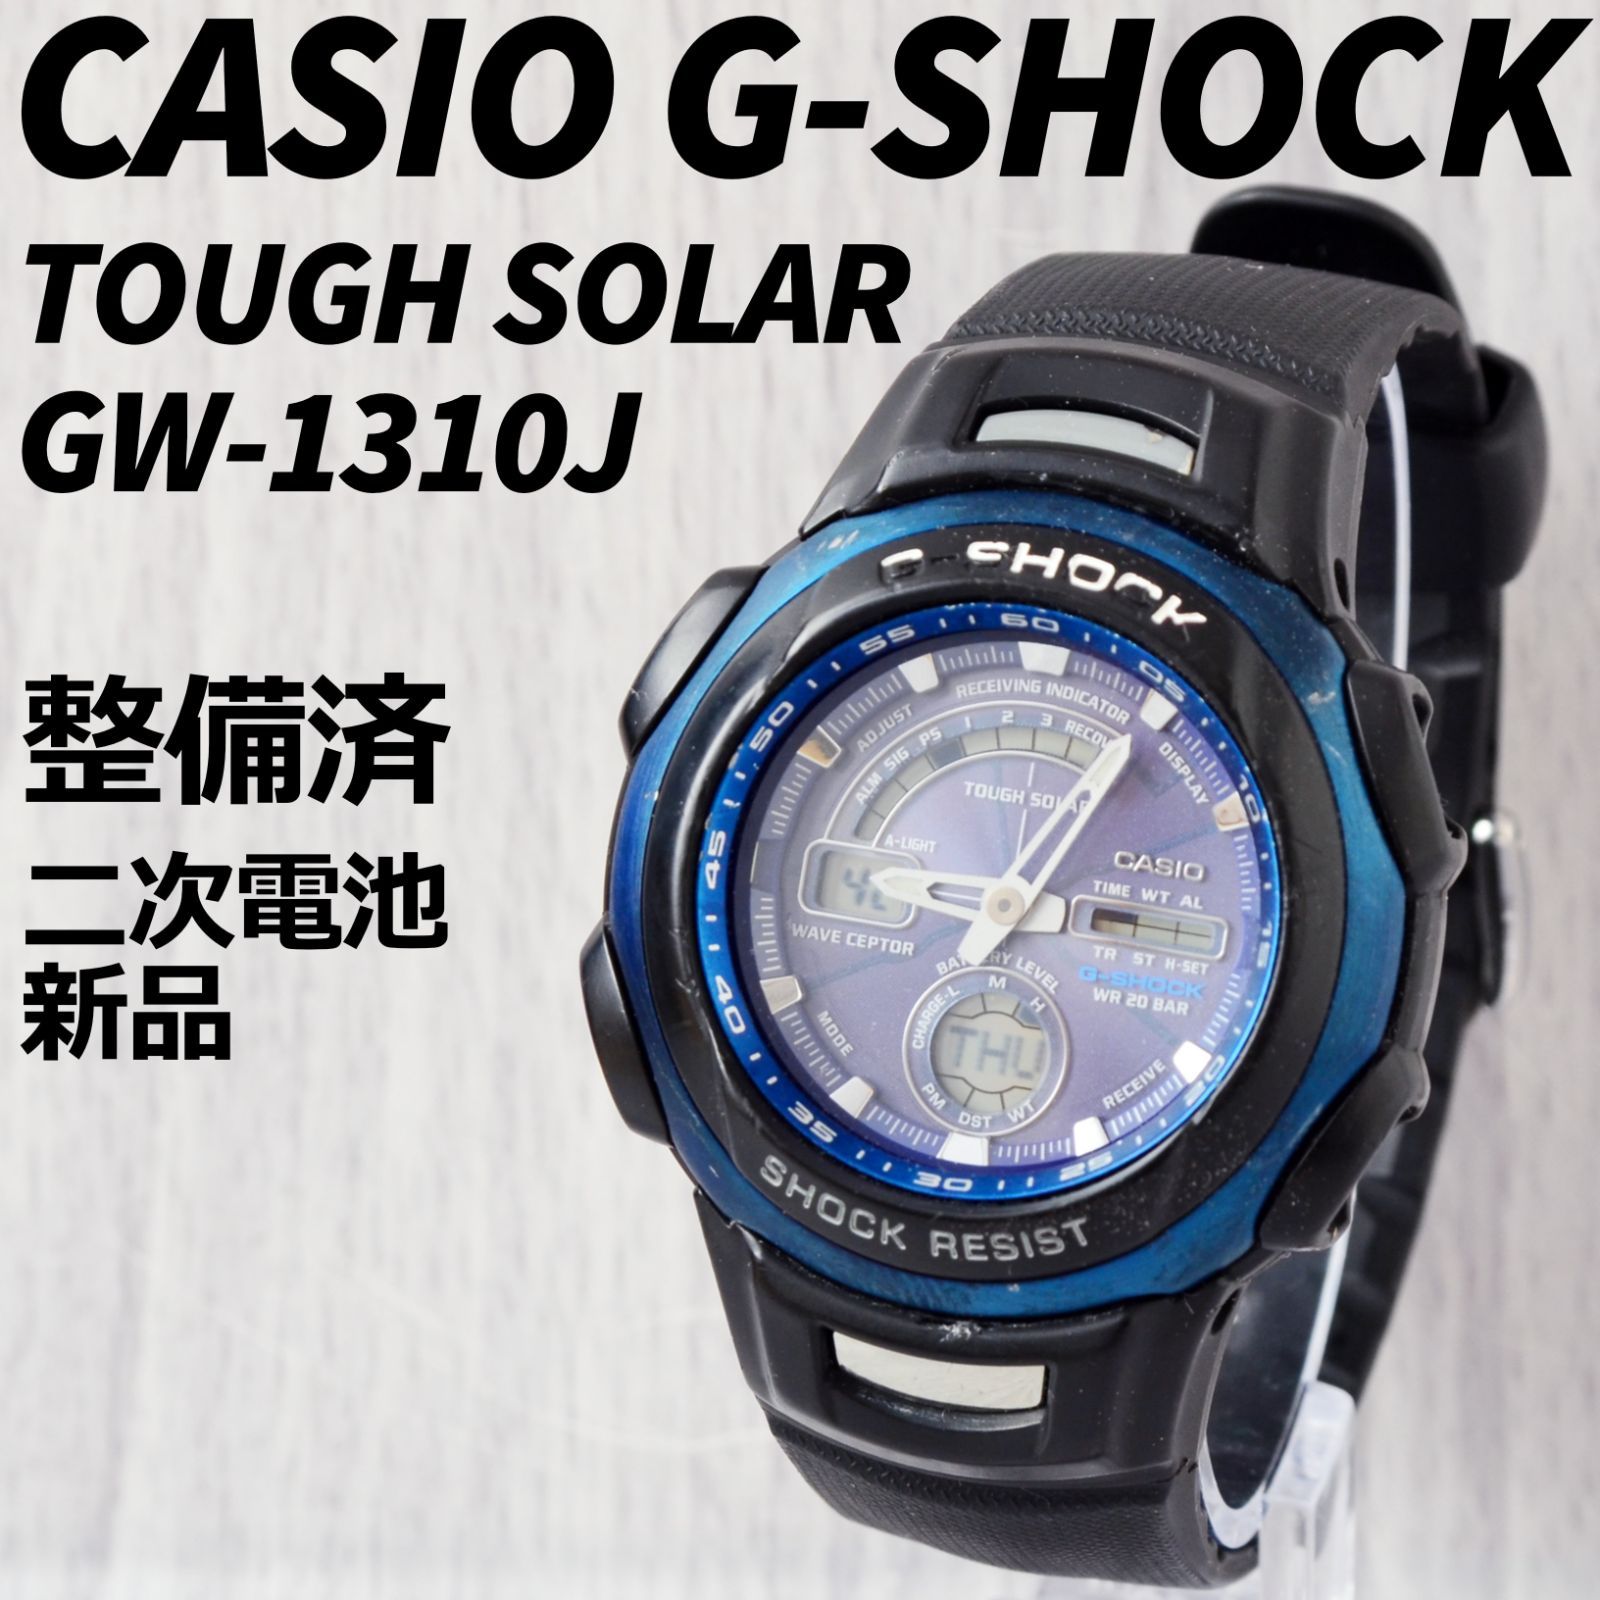 CASIO G-SHOCK GW-1310J TOUGH SOLAR 整備済-